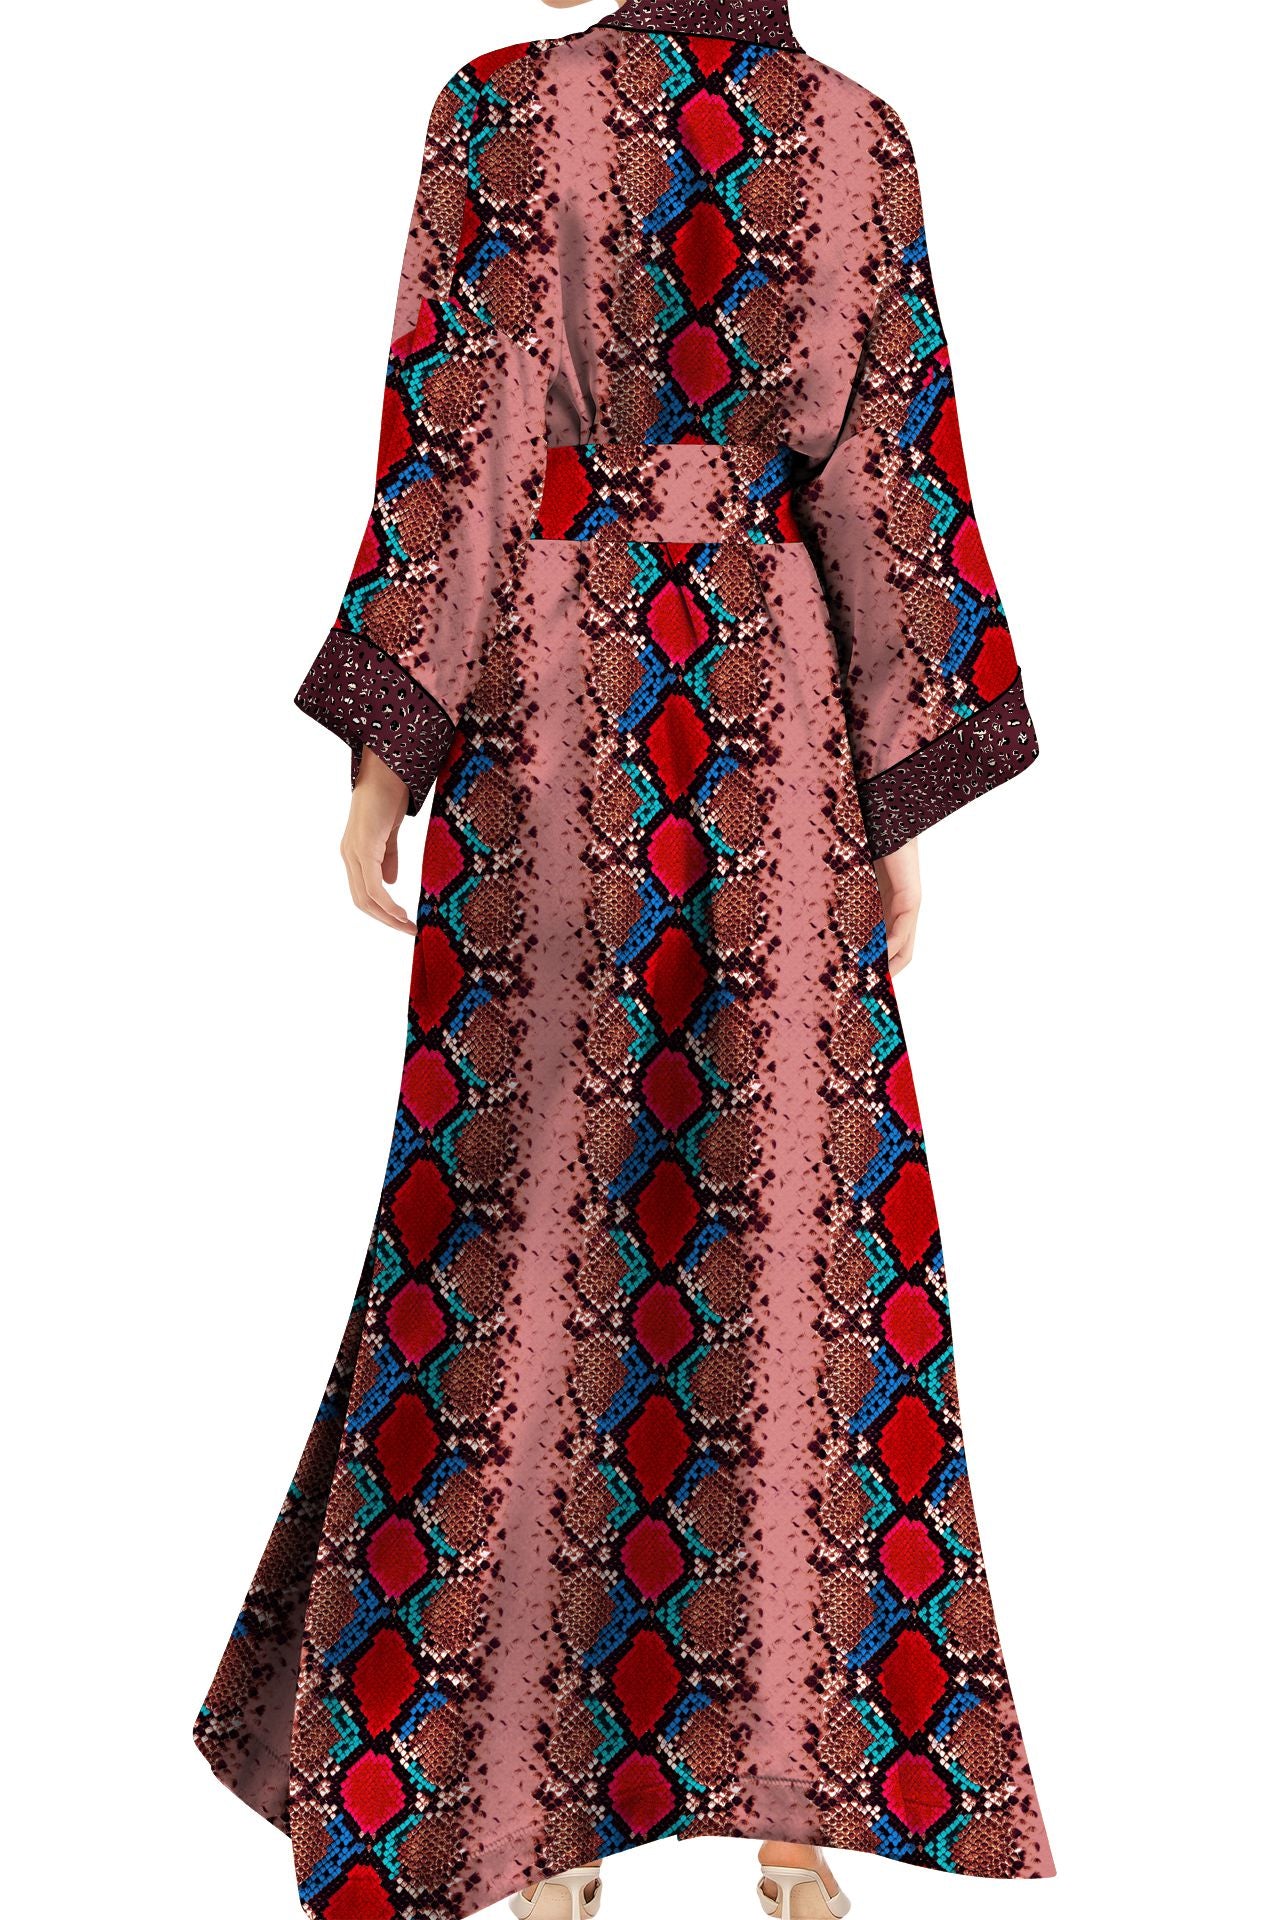 Made with Vegan Silk Long Kimono Robe Dress in Blood Stone